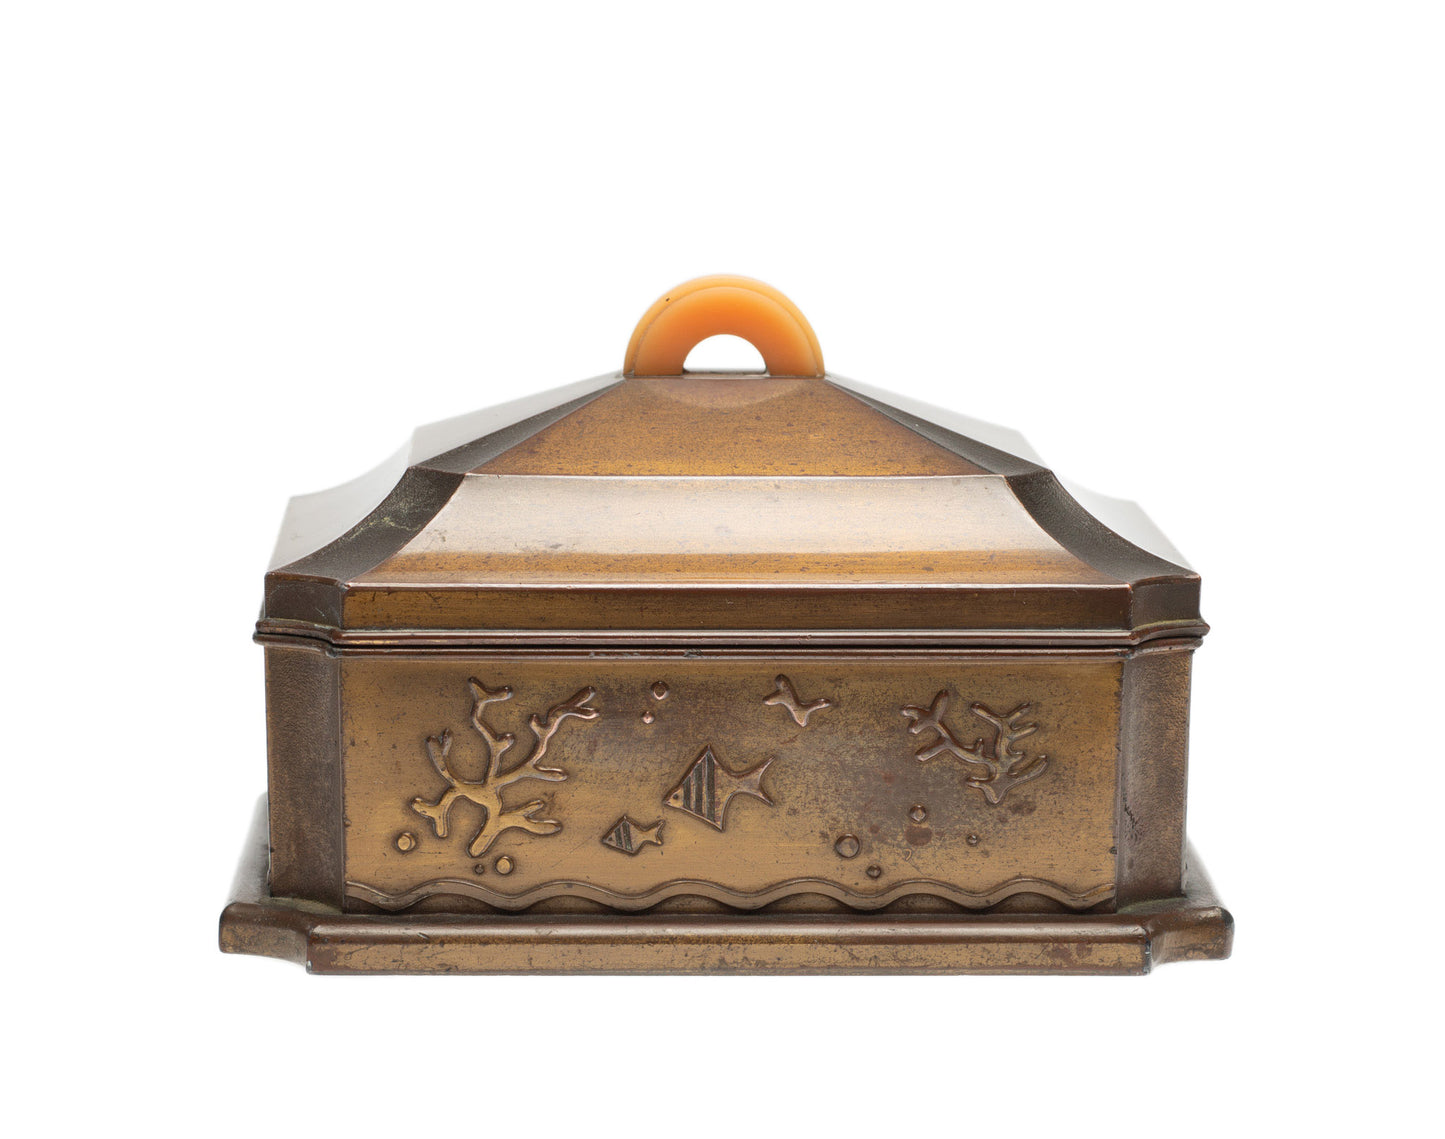 Japanese Art Deco Antimony Wear Cigarette Box with Fish & Stylised Design c1930 (Code 2380)